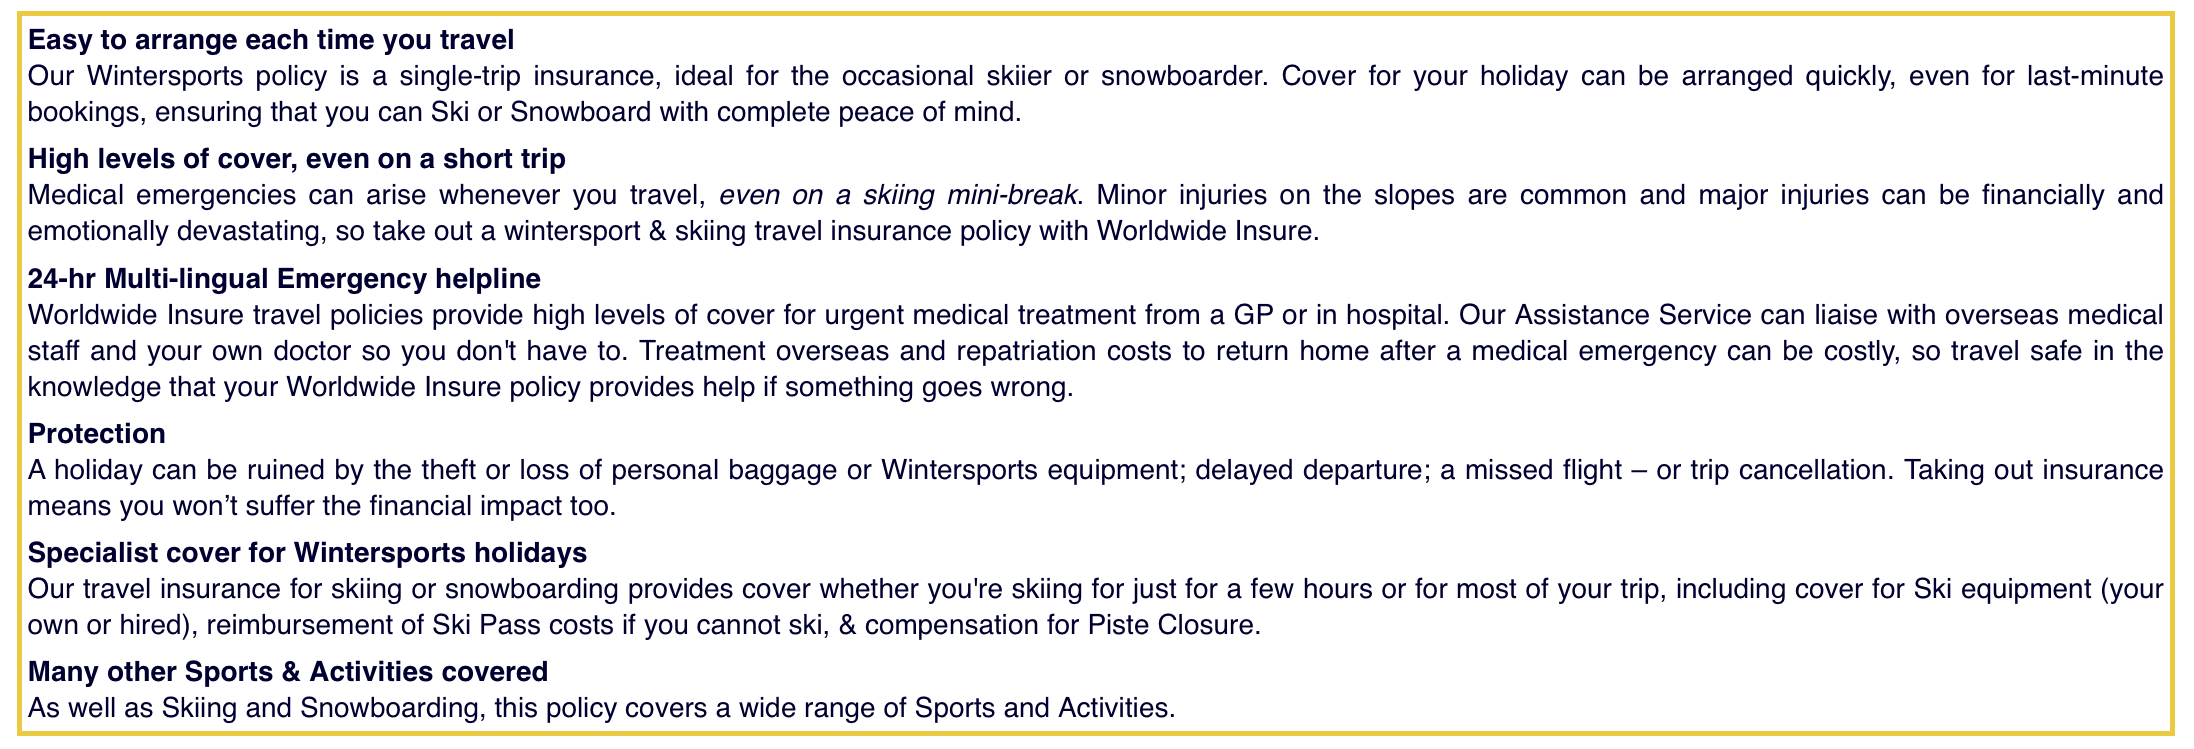 Description oi Benefits of wintersports travel insurance